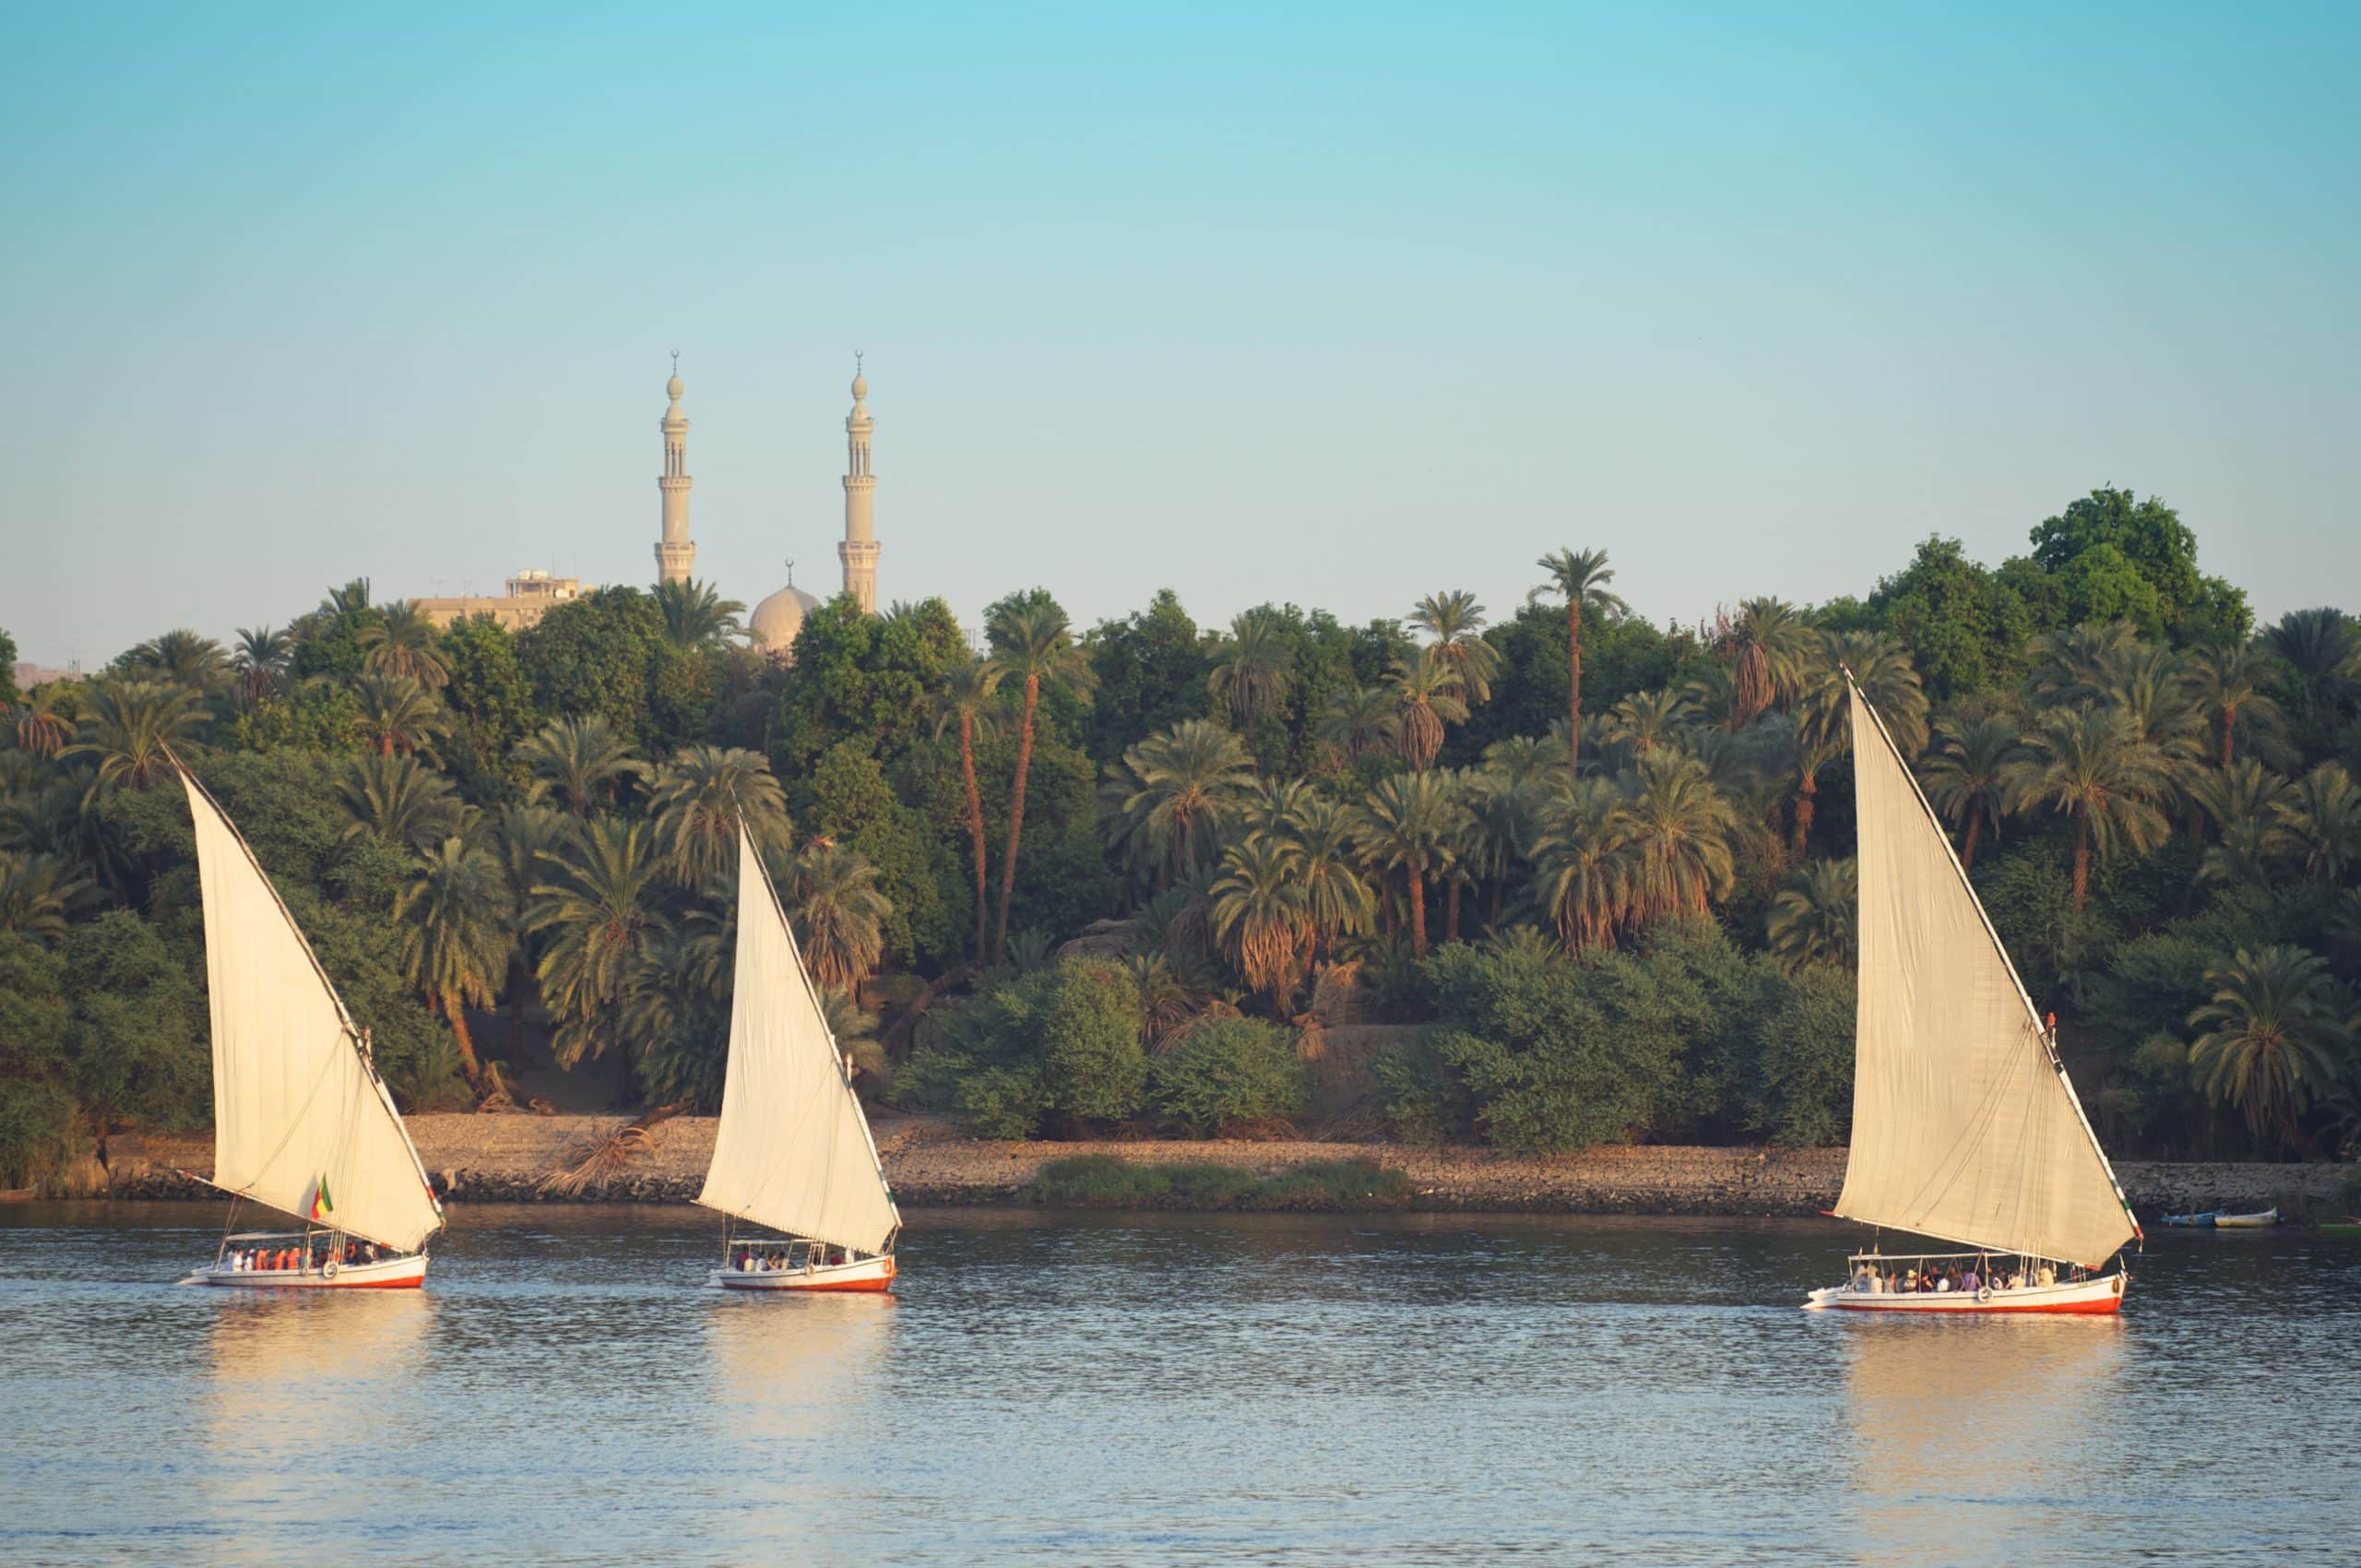 Egyptian felucca sailboats sail into the setting sun on the Nile River in Aswan Egypt